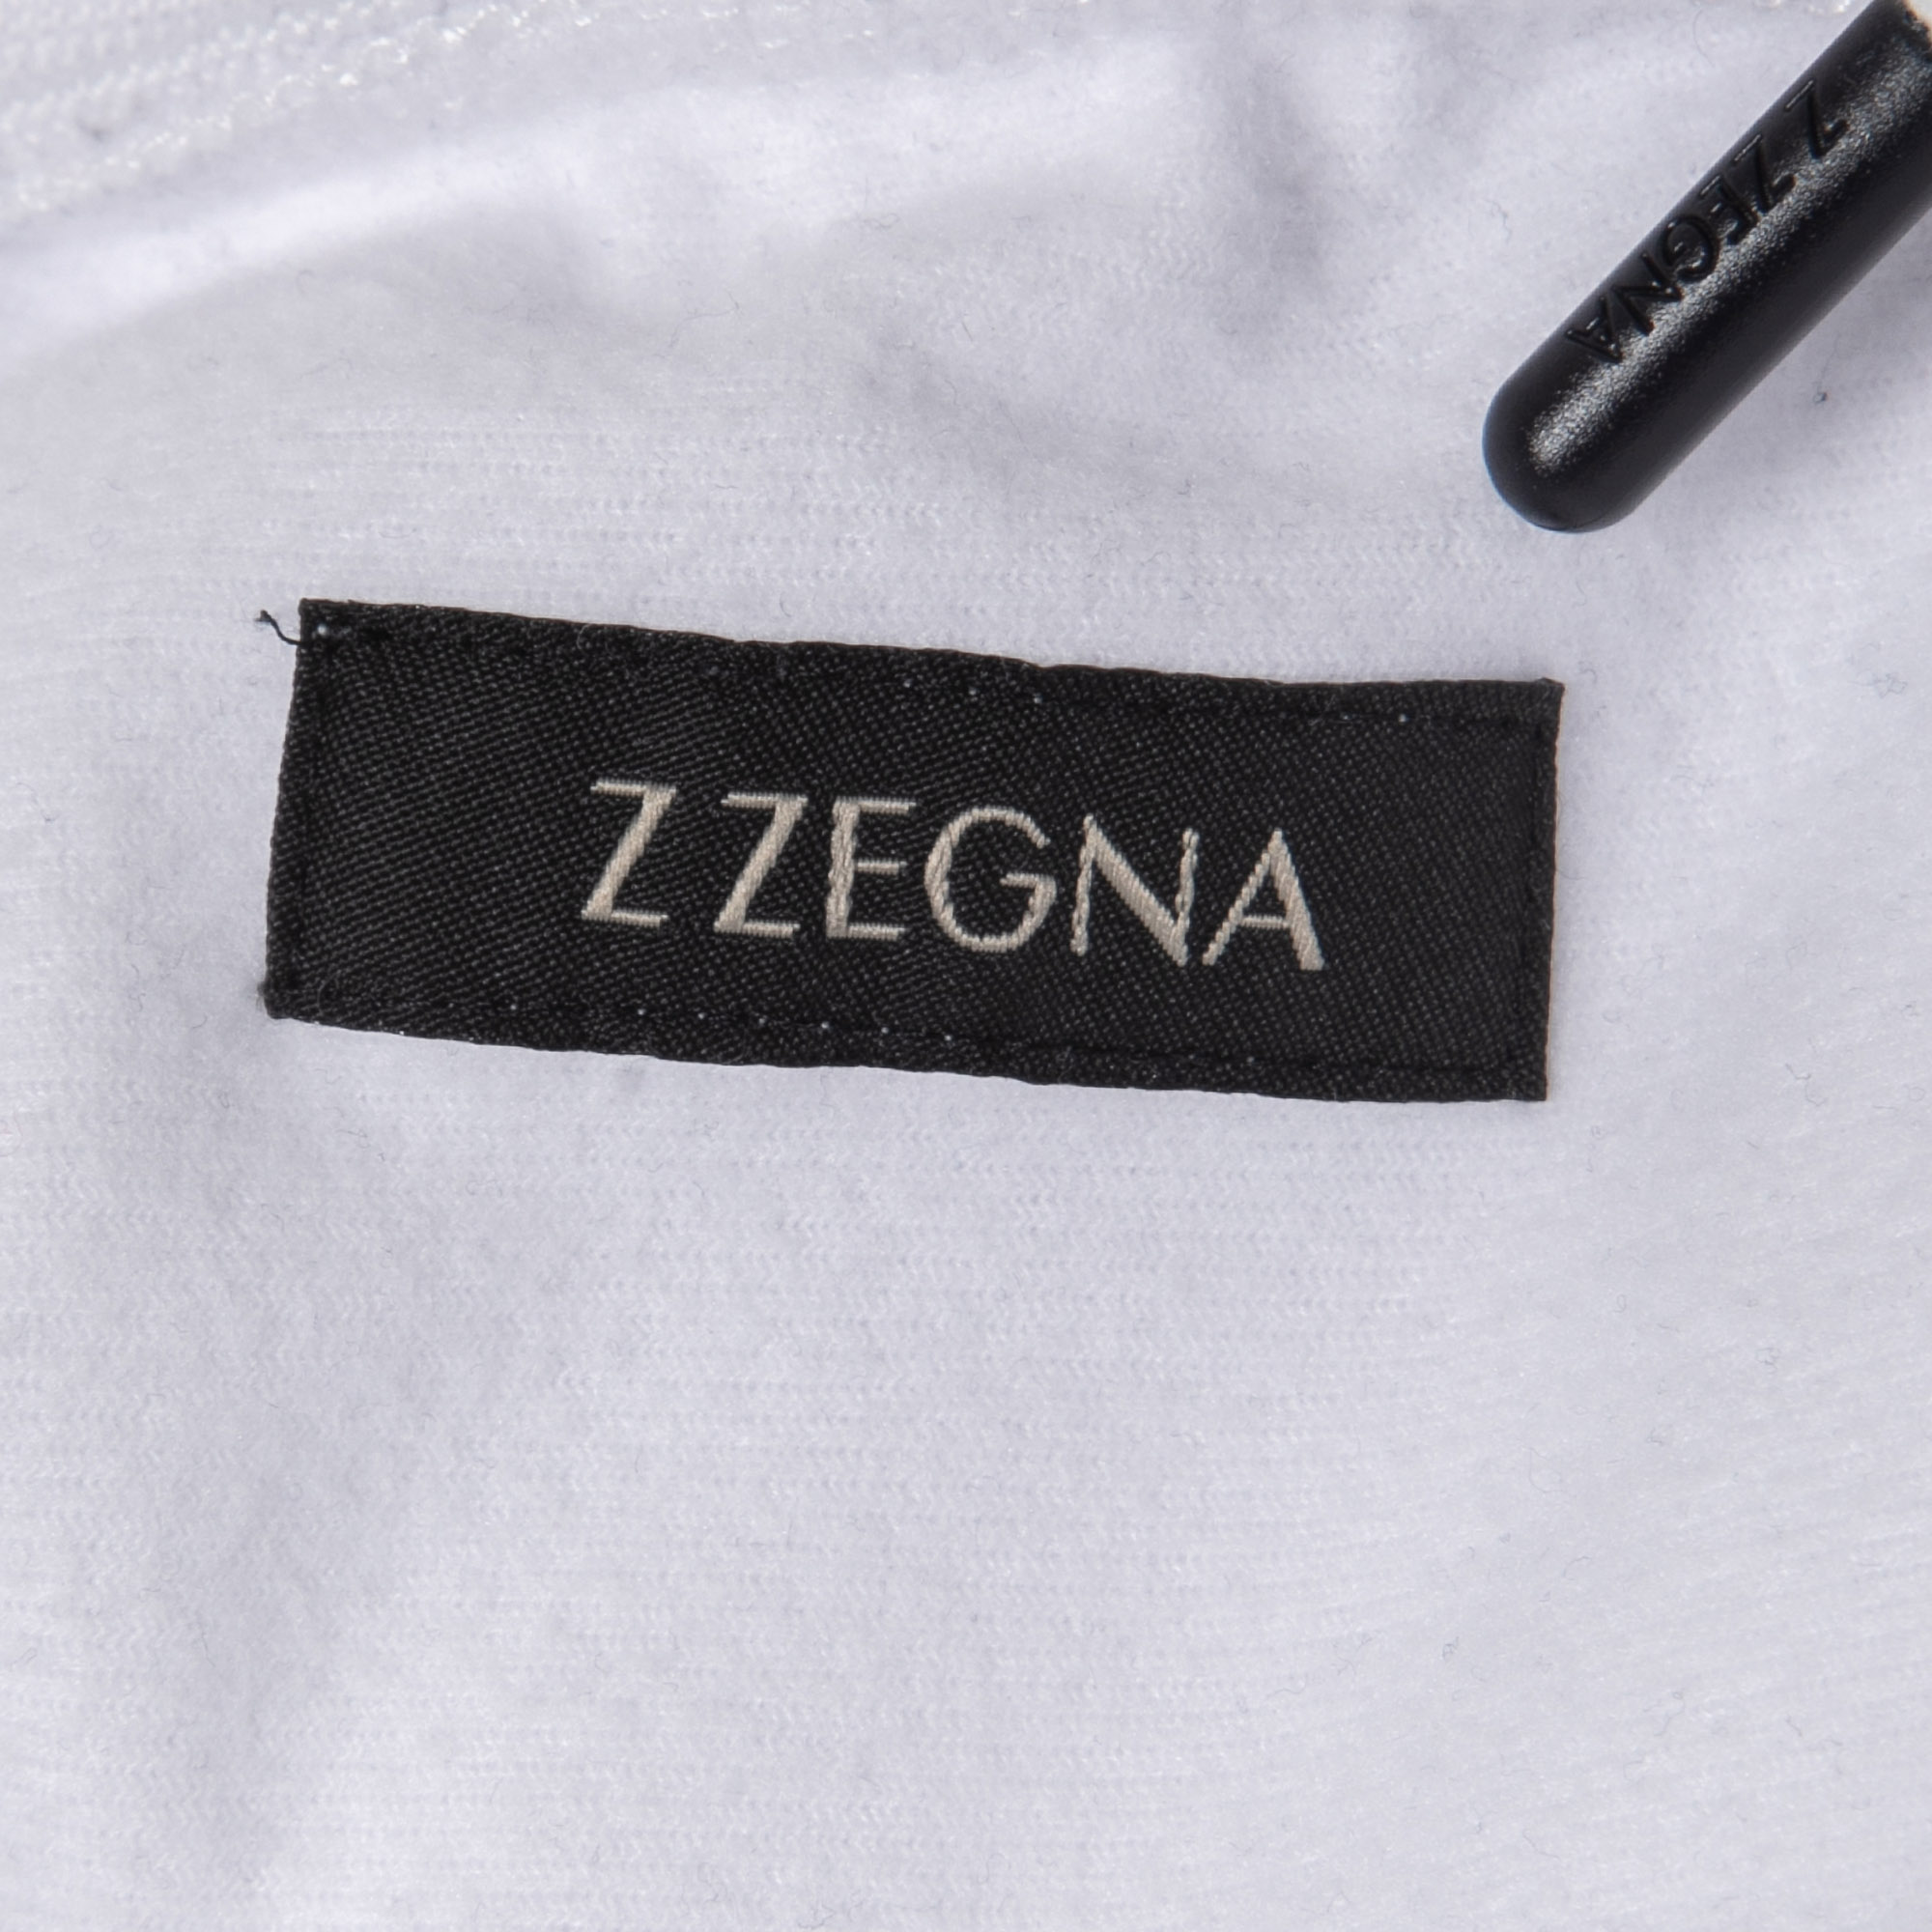 Z Zegna White/Navy Blue Logo Print Synthetic Joggers XL